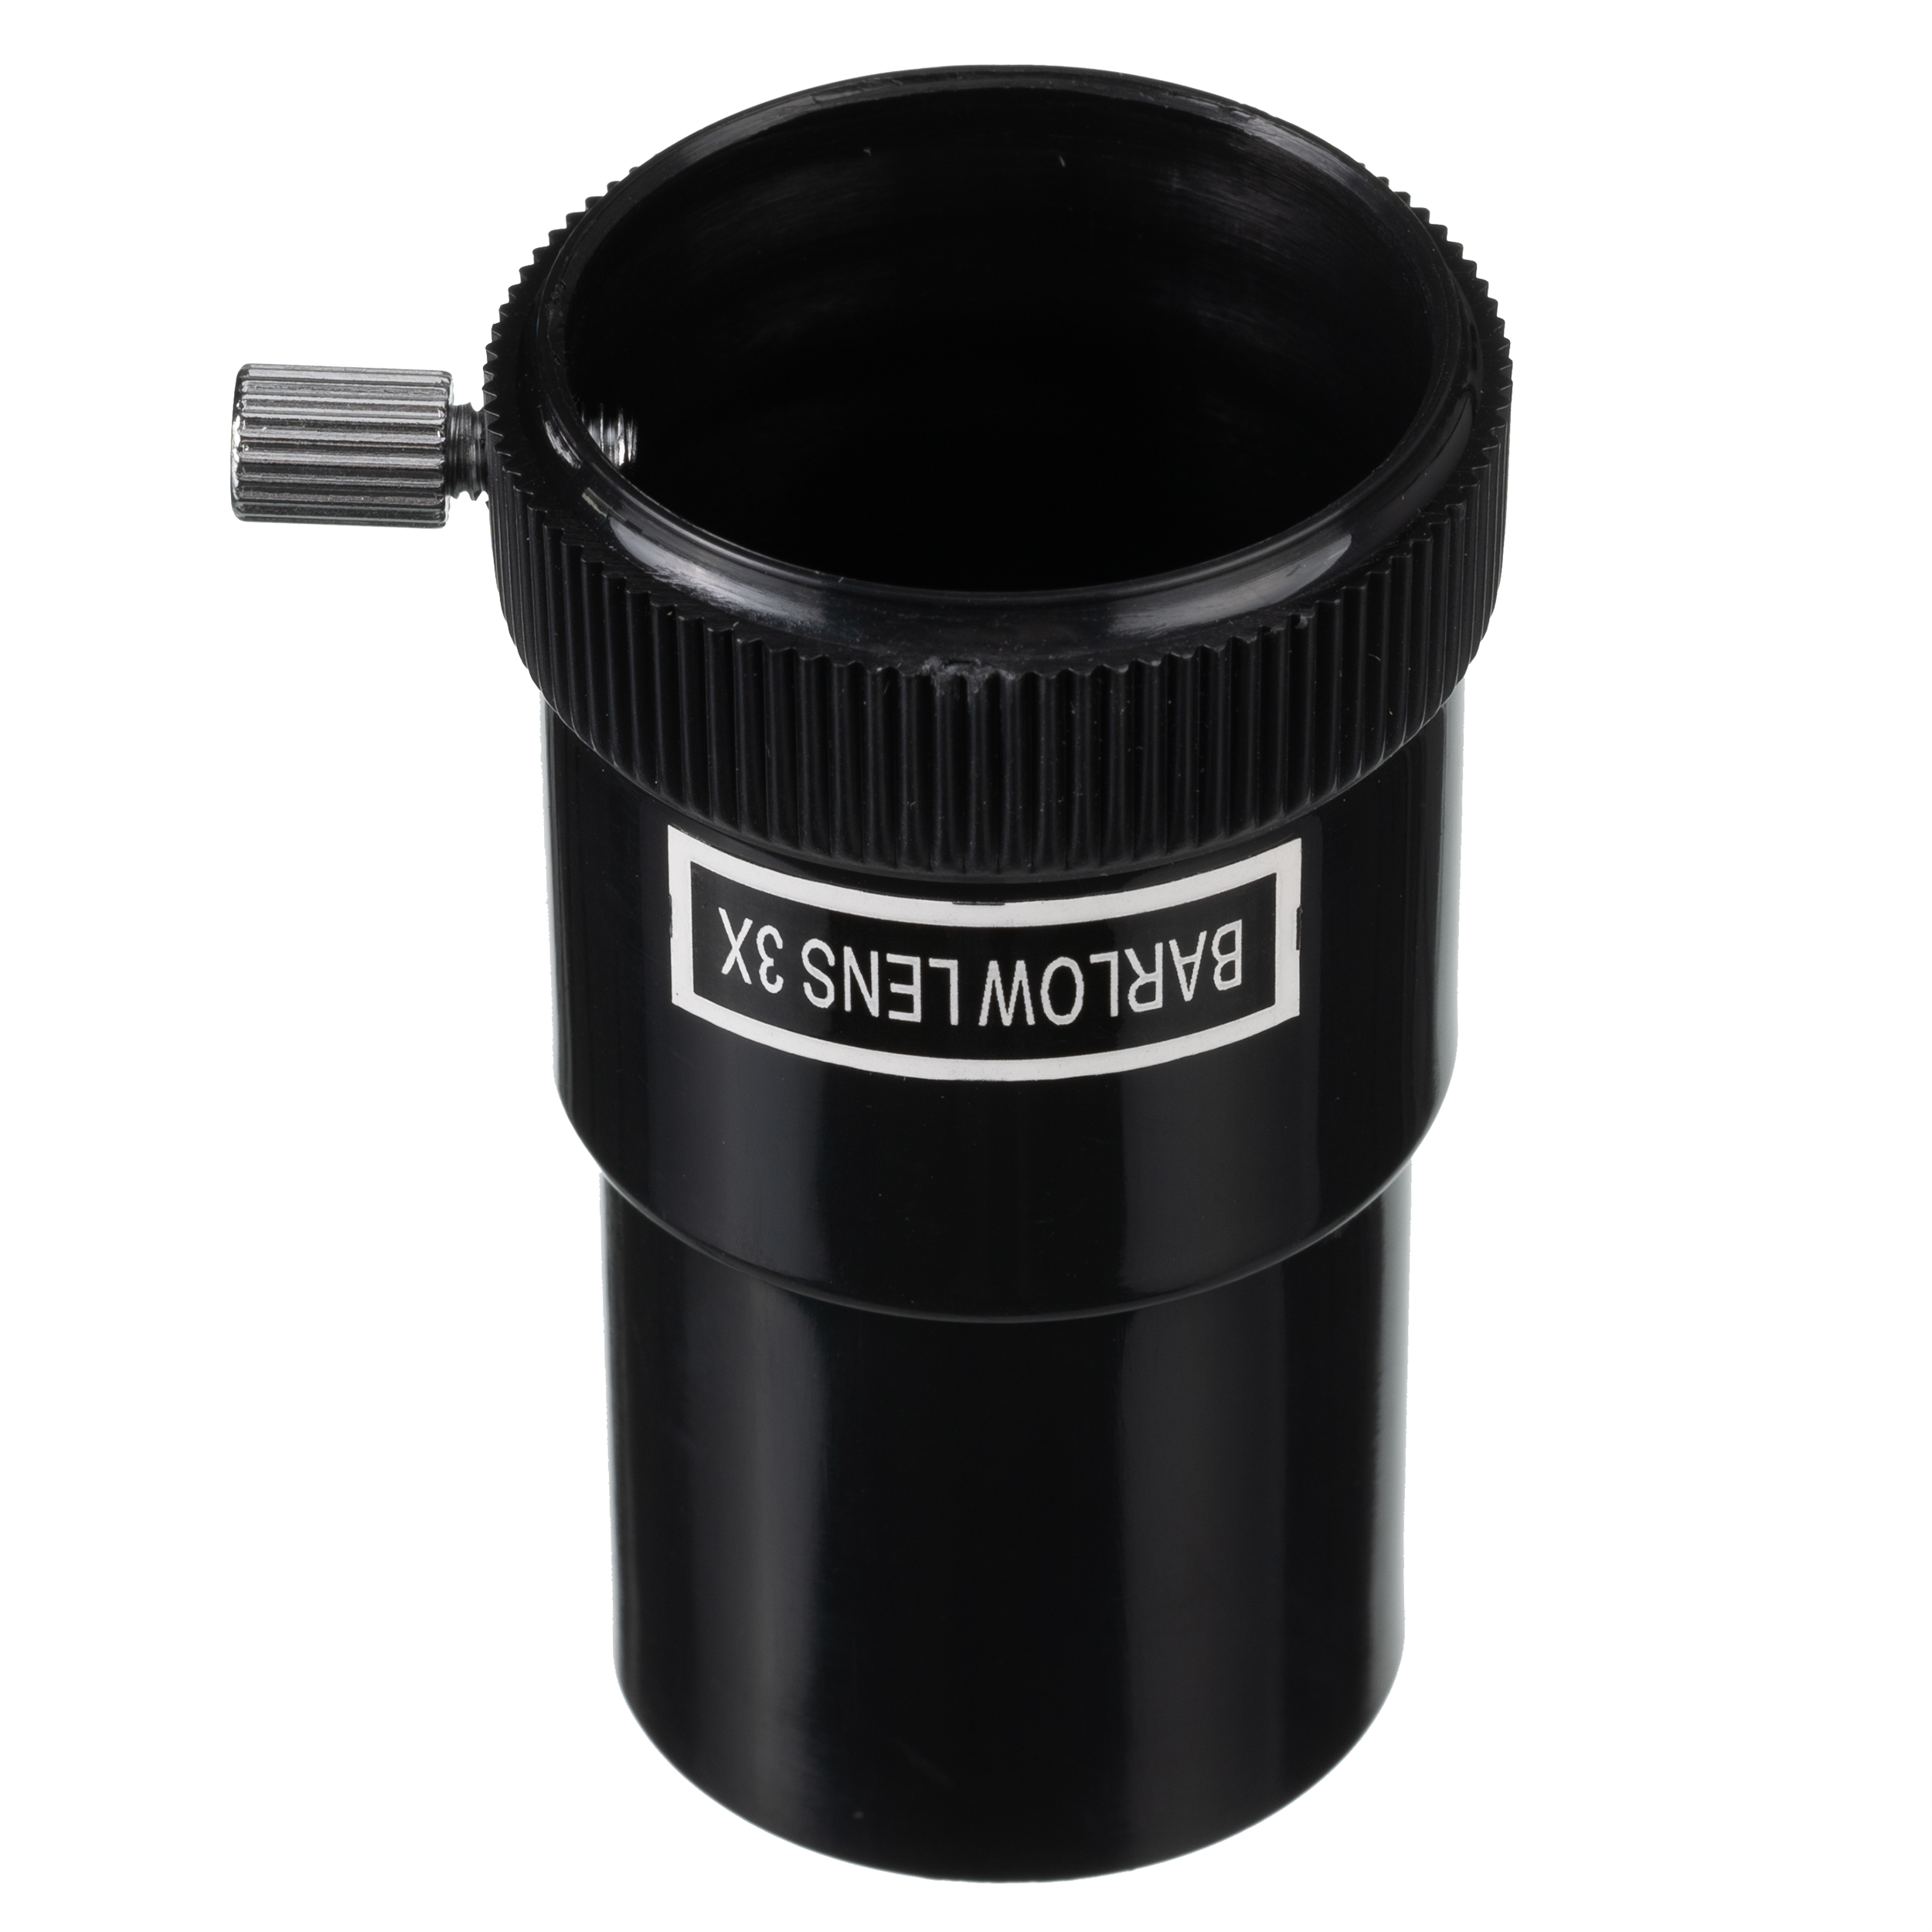 BRESSER Barlow Lens 3x 1.25"